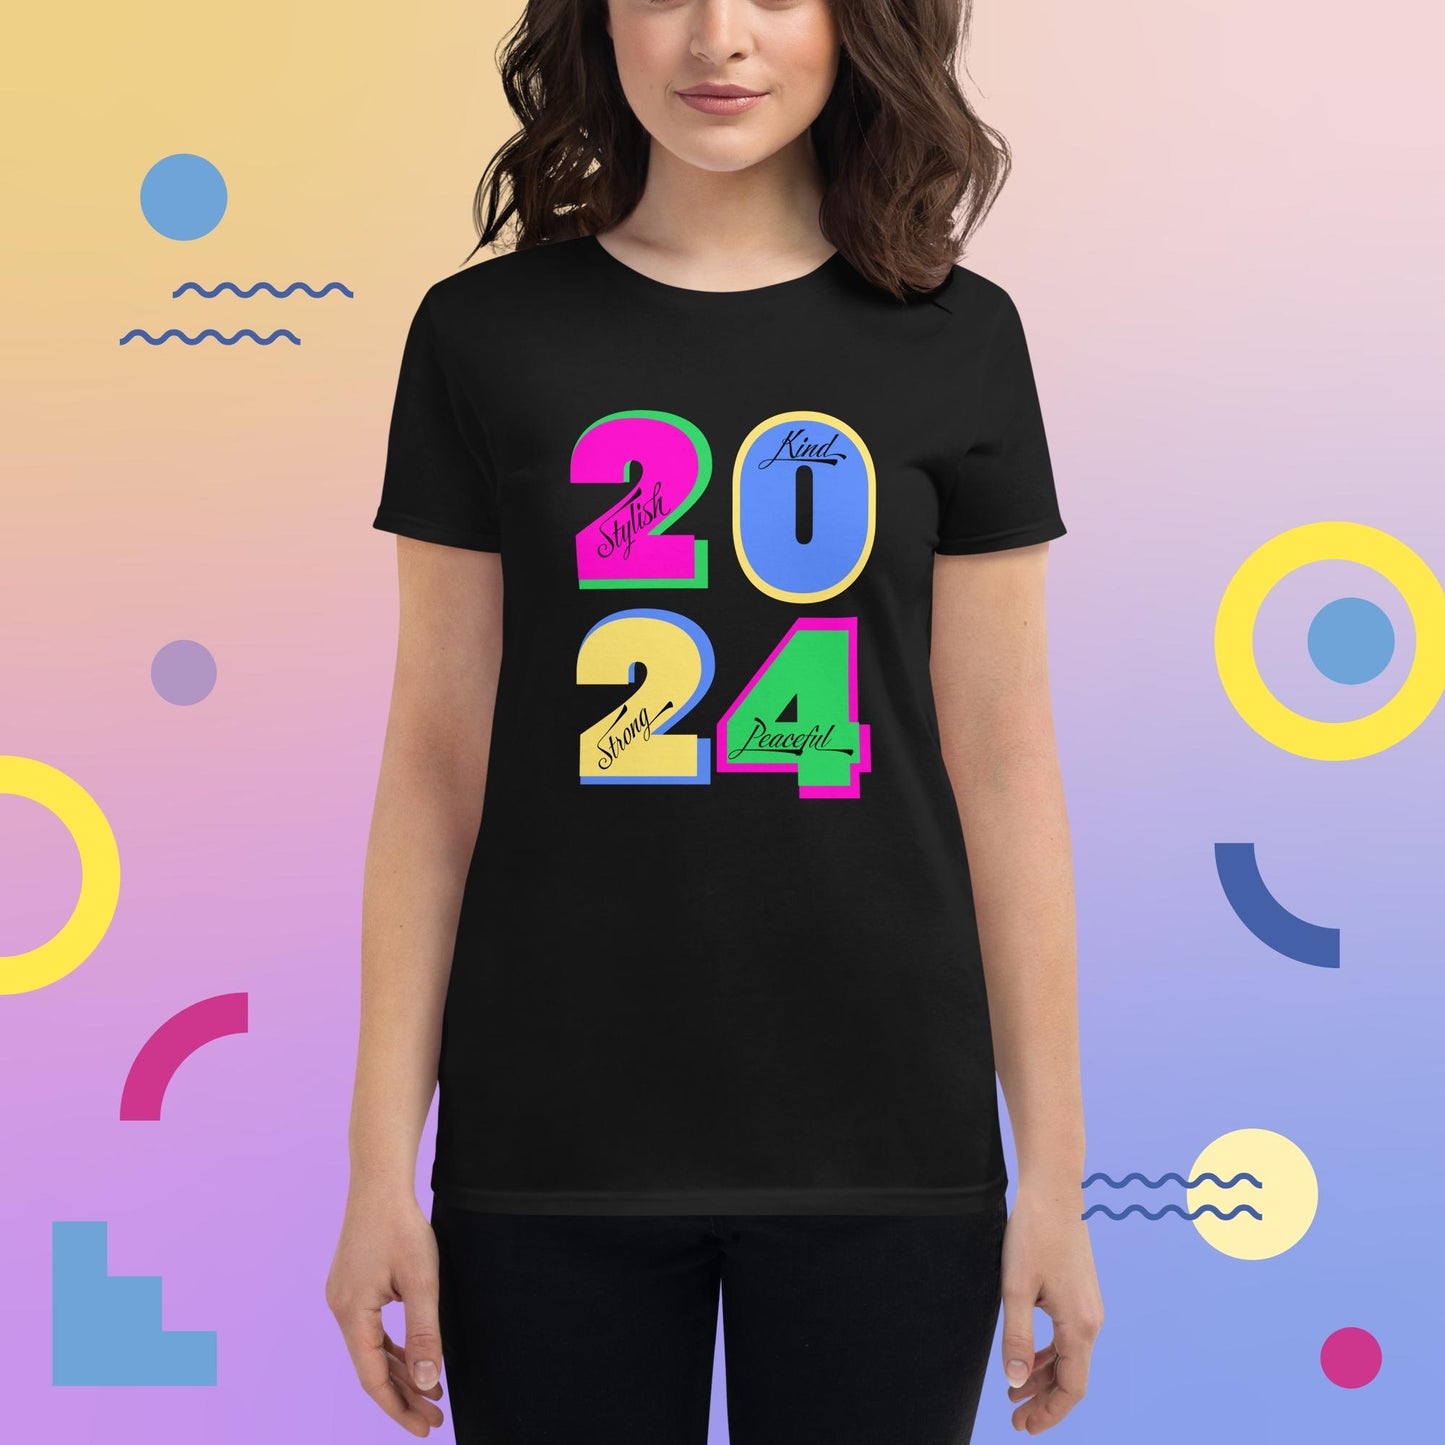 2024: Stylish, Kind, Strong, Peaceful: Women's short sleeve t-shirt